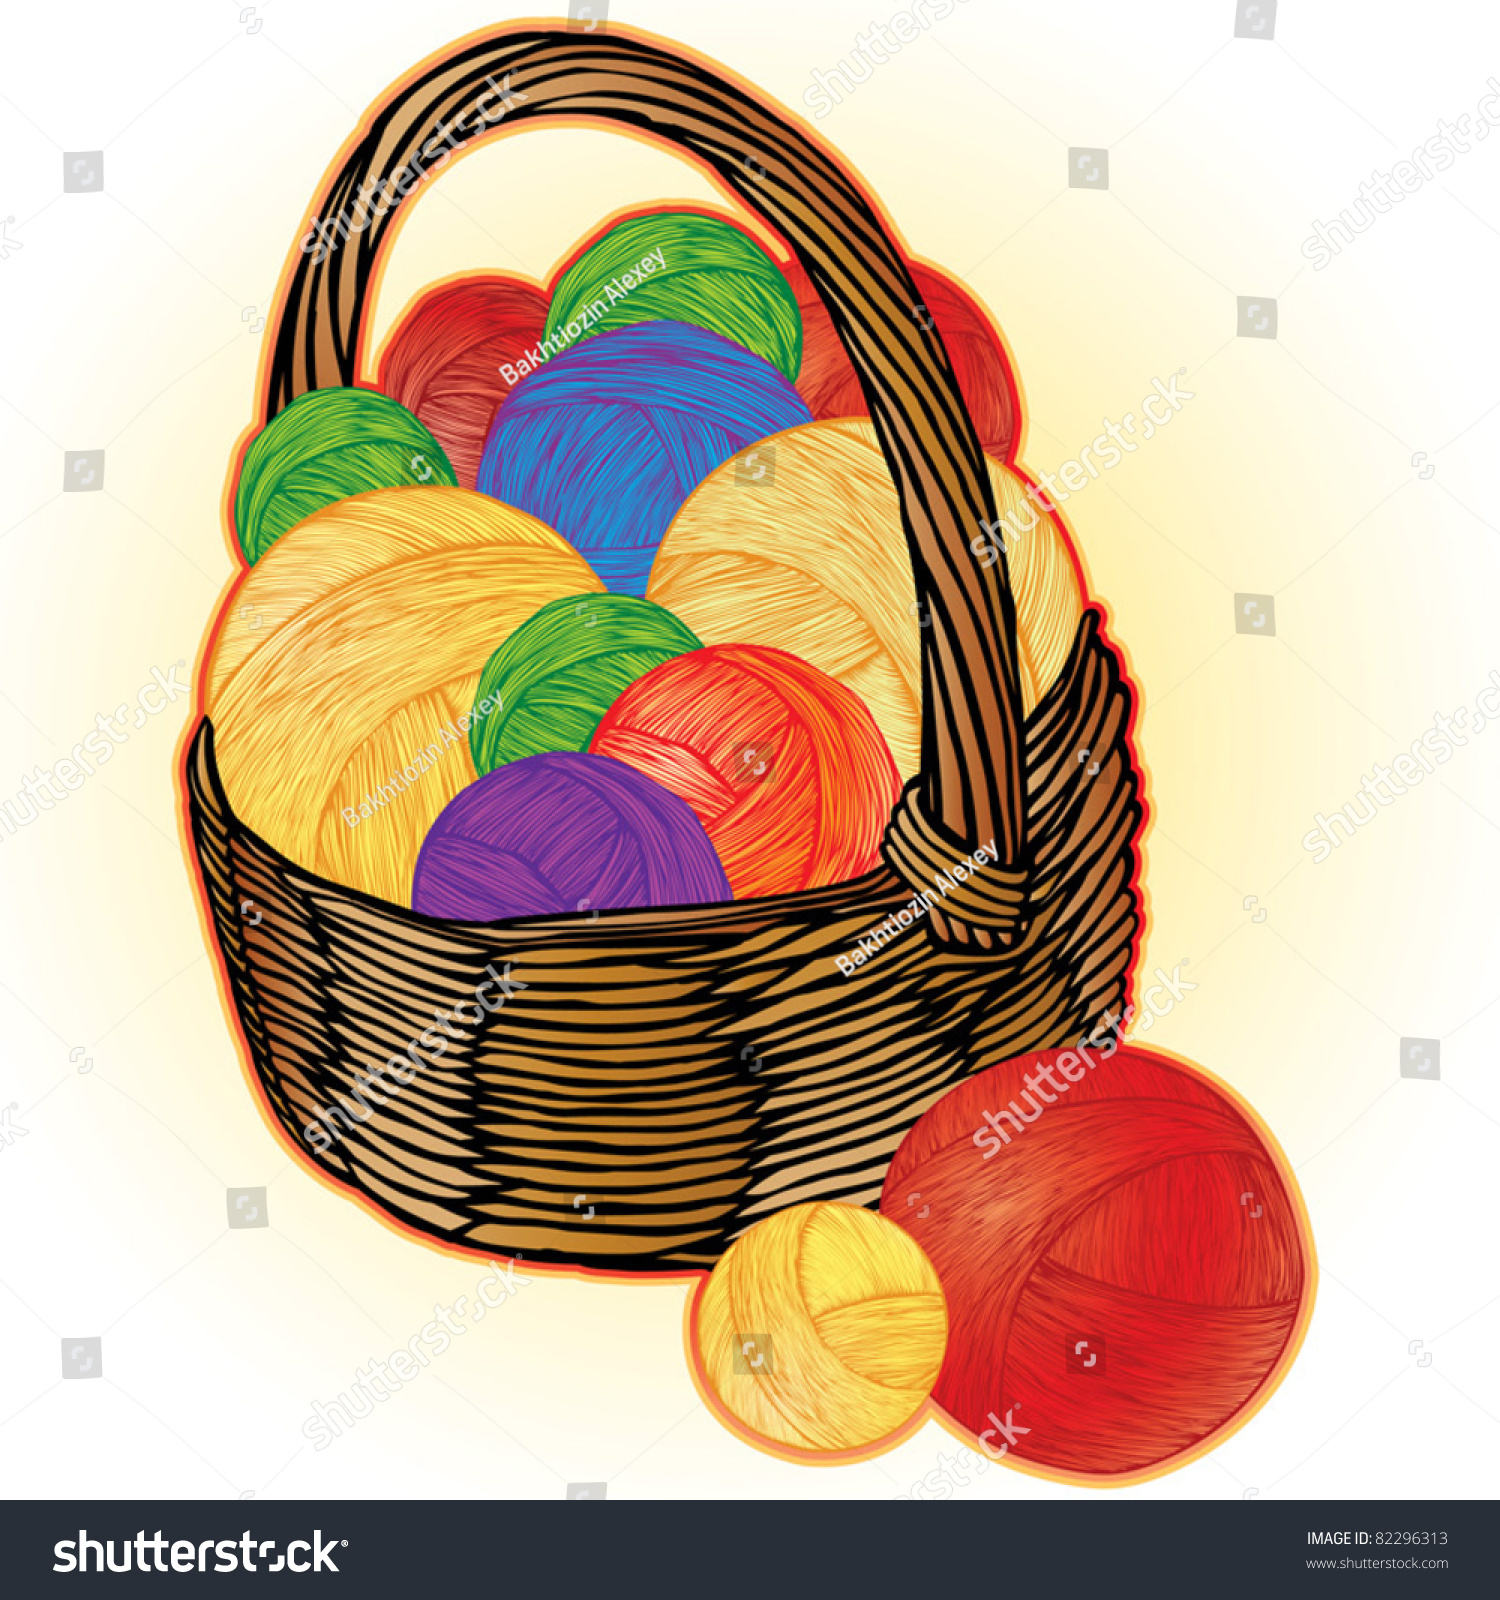 clipart basket of yarn - photo #5